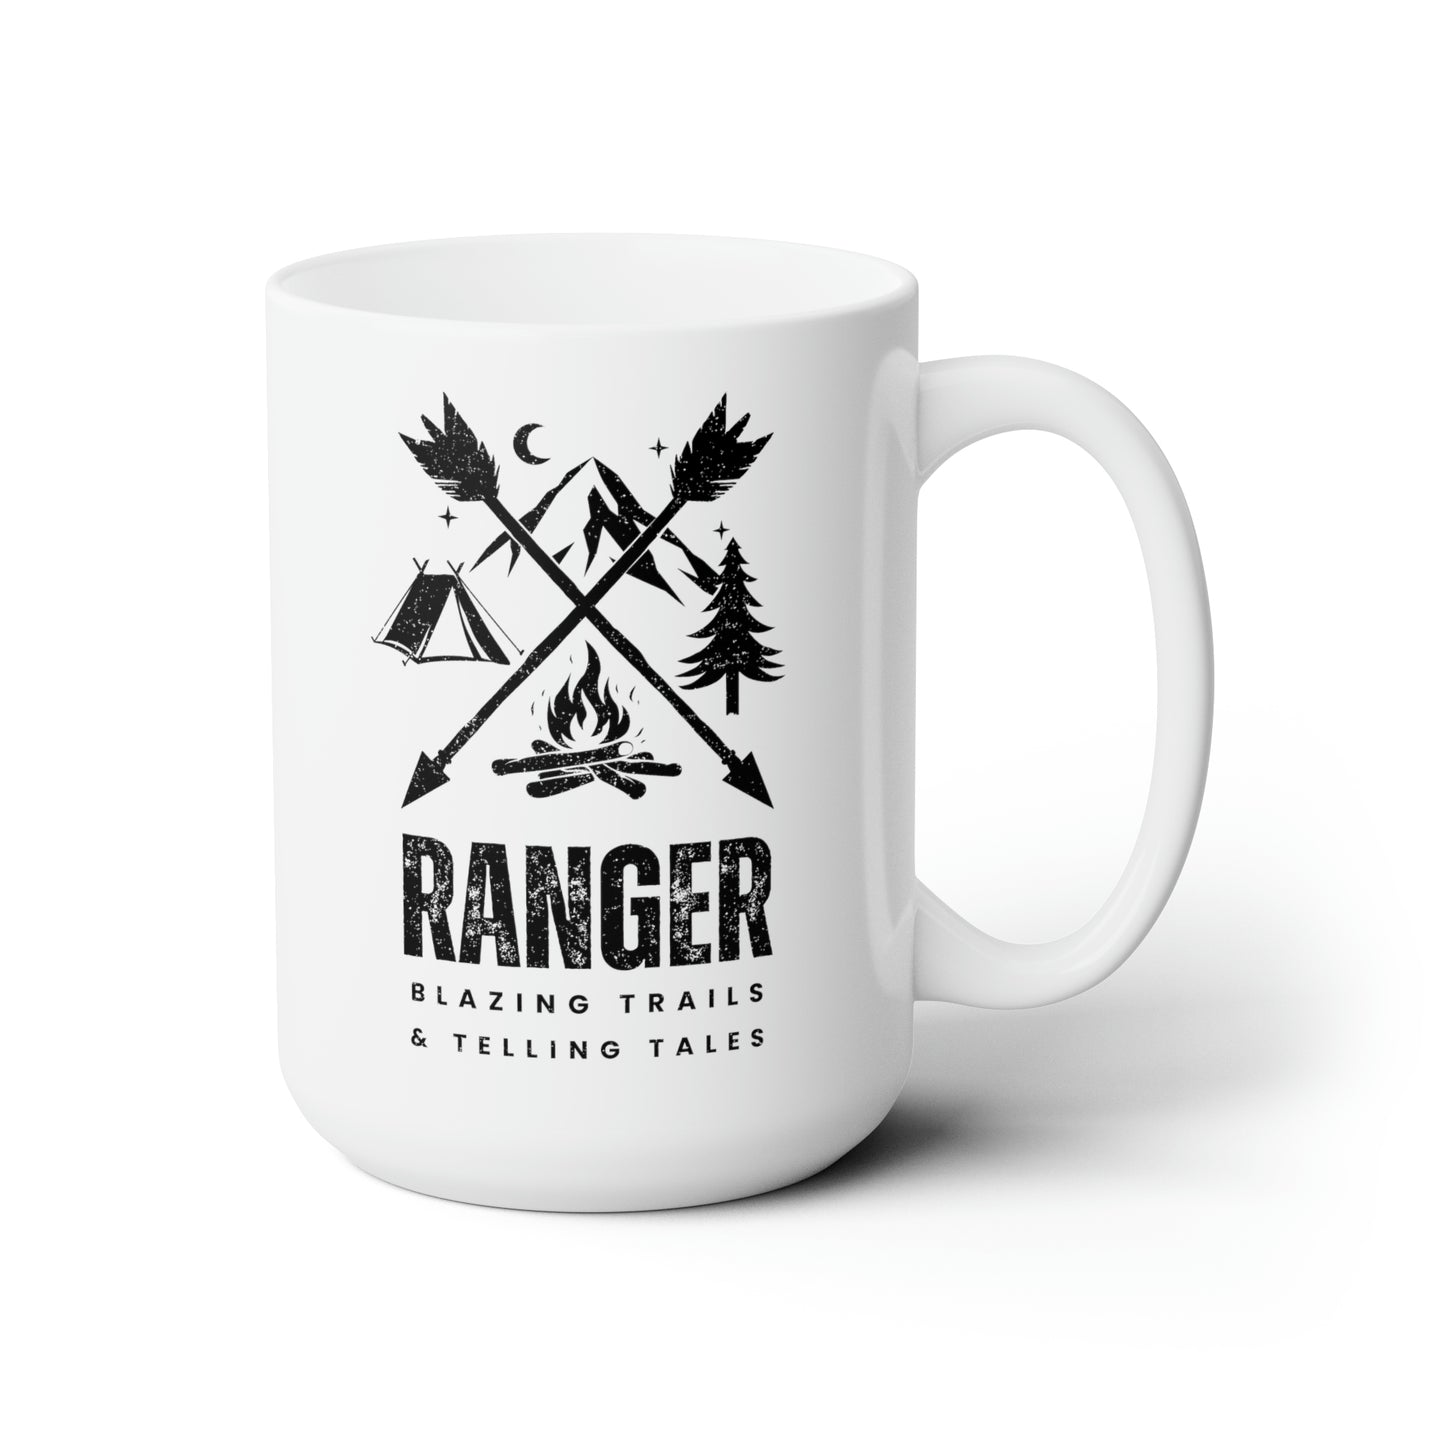 Ranger: Blazing Trails and Telling Tales - Large White Mug, 15 oz